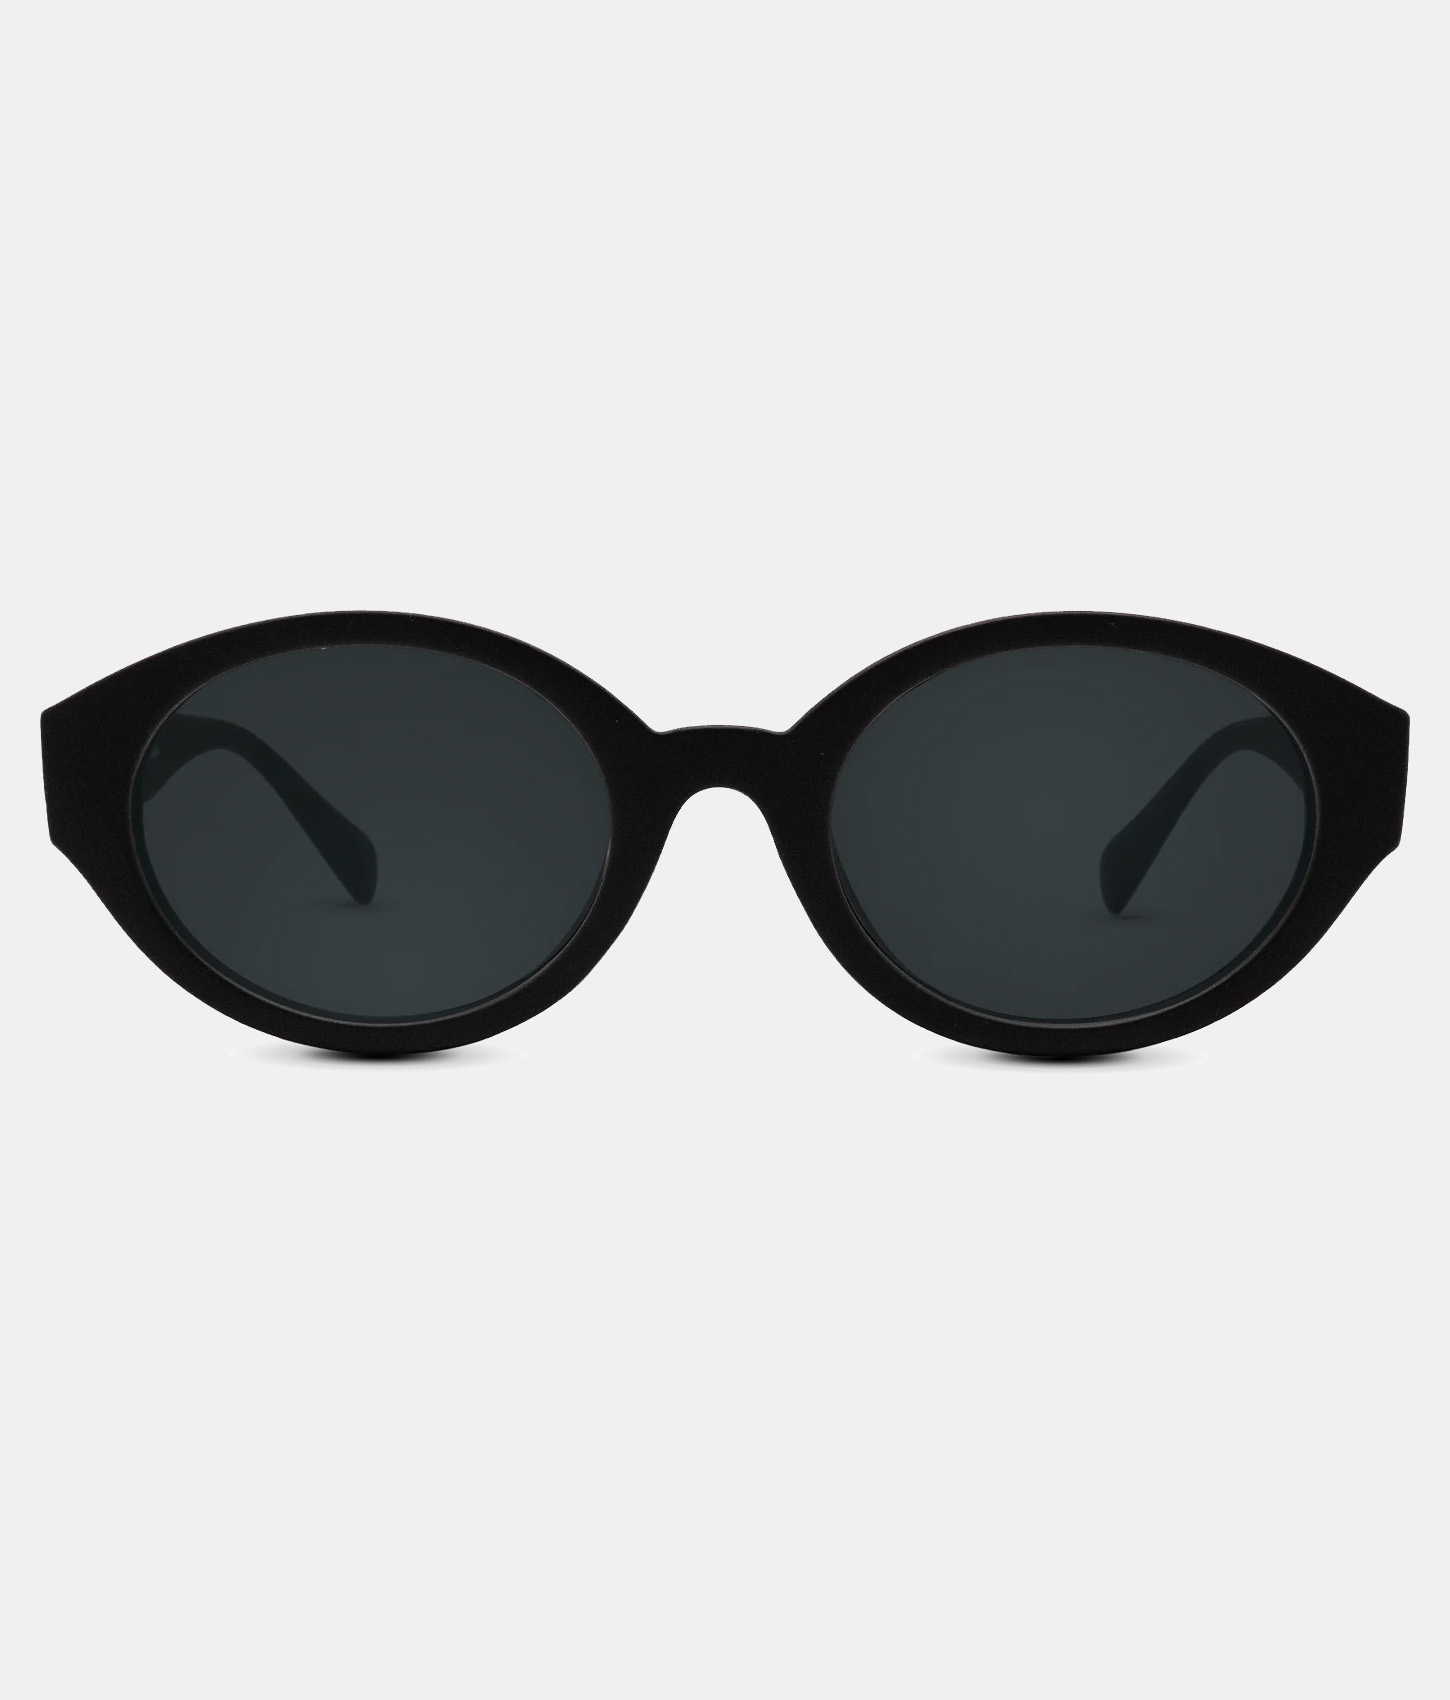 Atypical Polarized Sunglasses